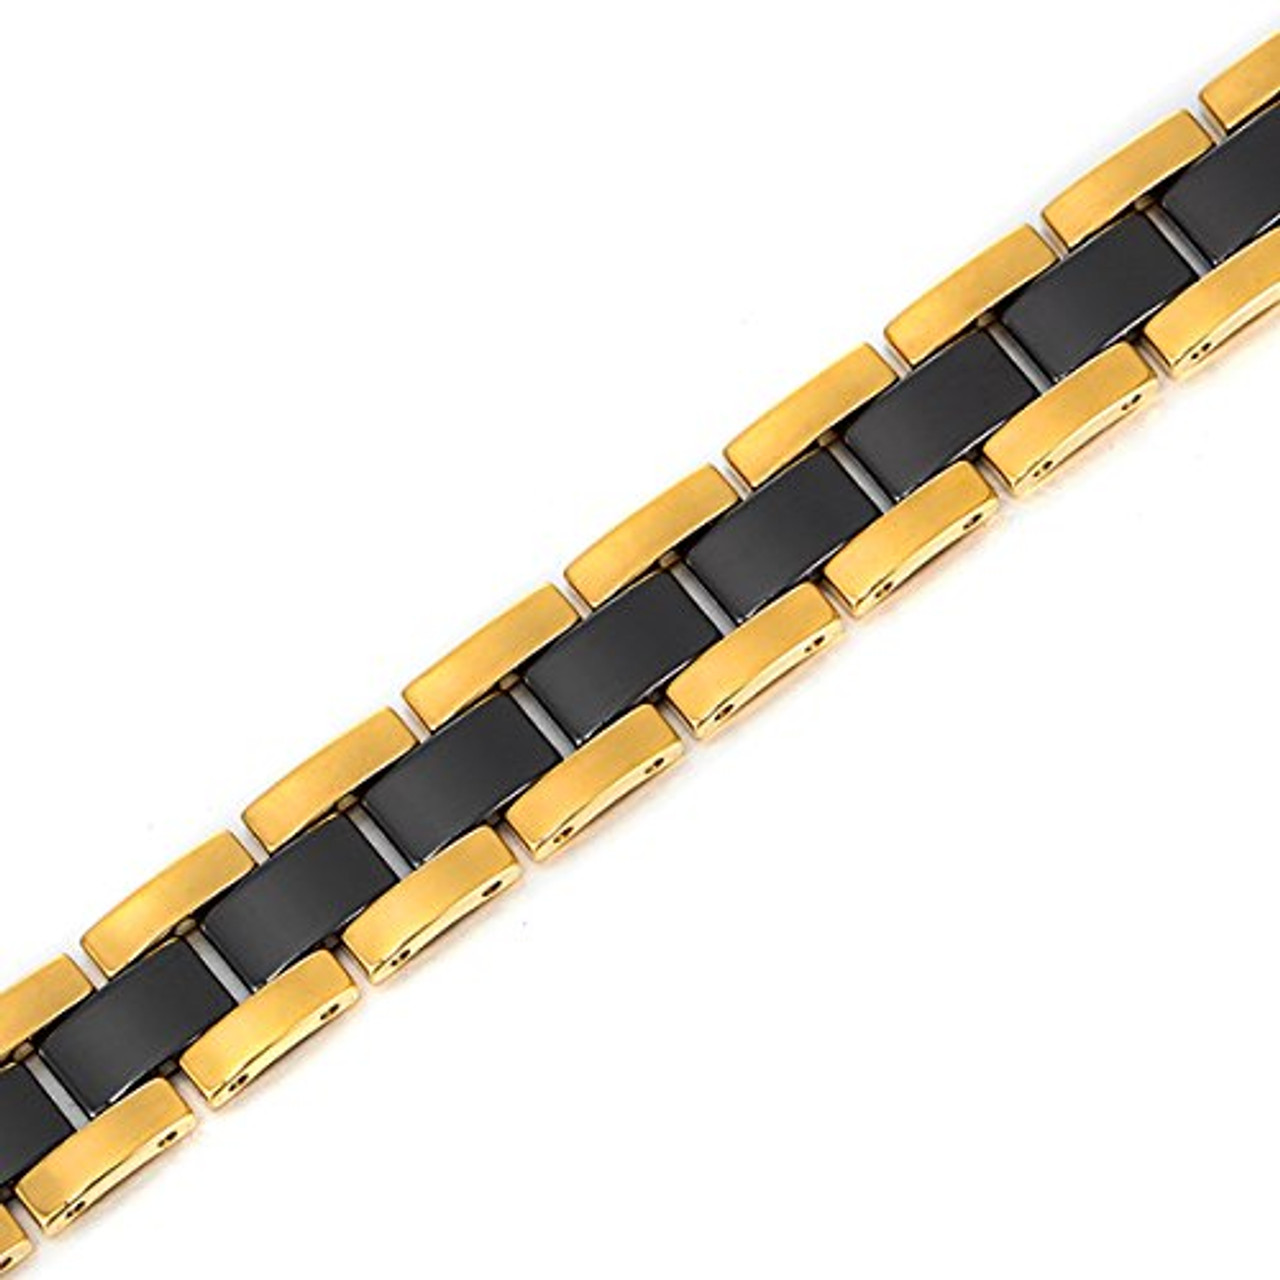 8.25" Inch Length - Mens Tungsten Bracelet - Two-Tone Tungsten Carbide, Ceramic & Magnets Link Bracelet for Men (Gold and Black)